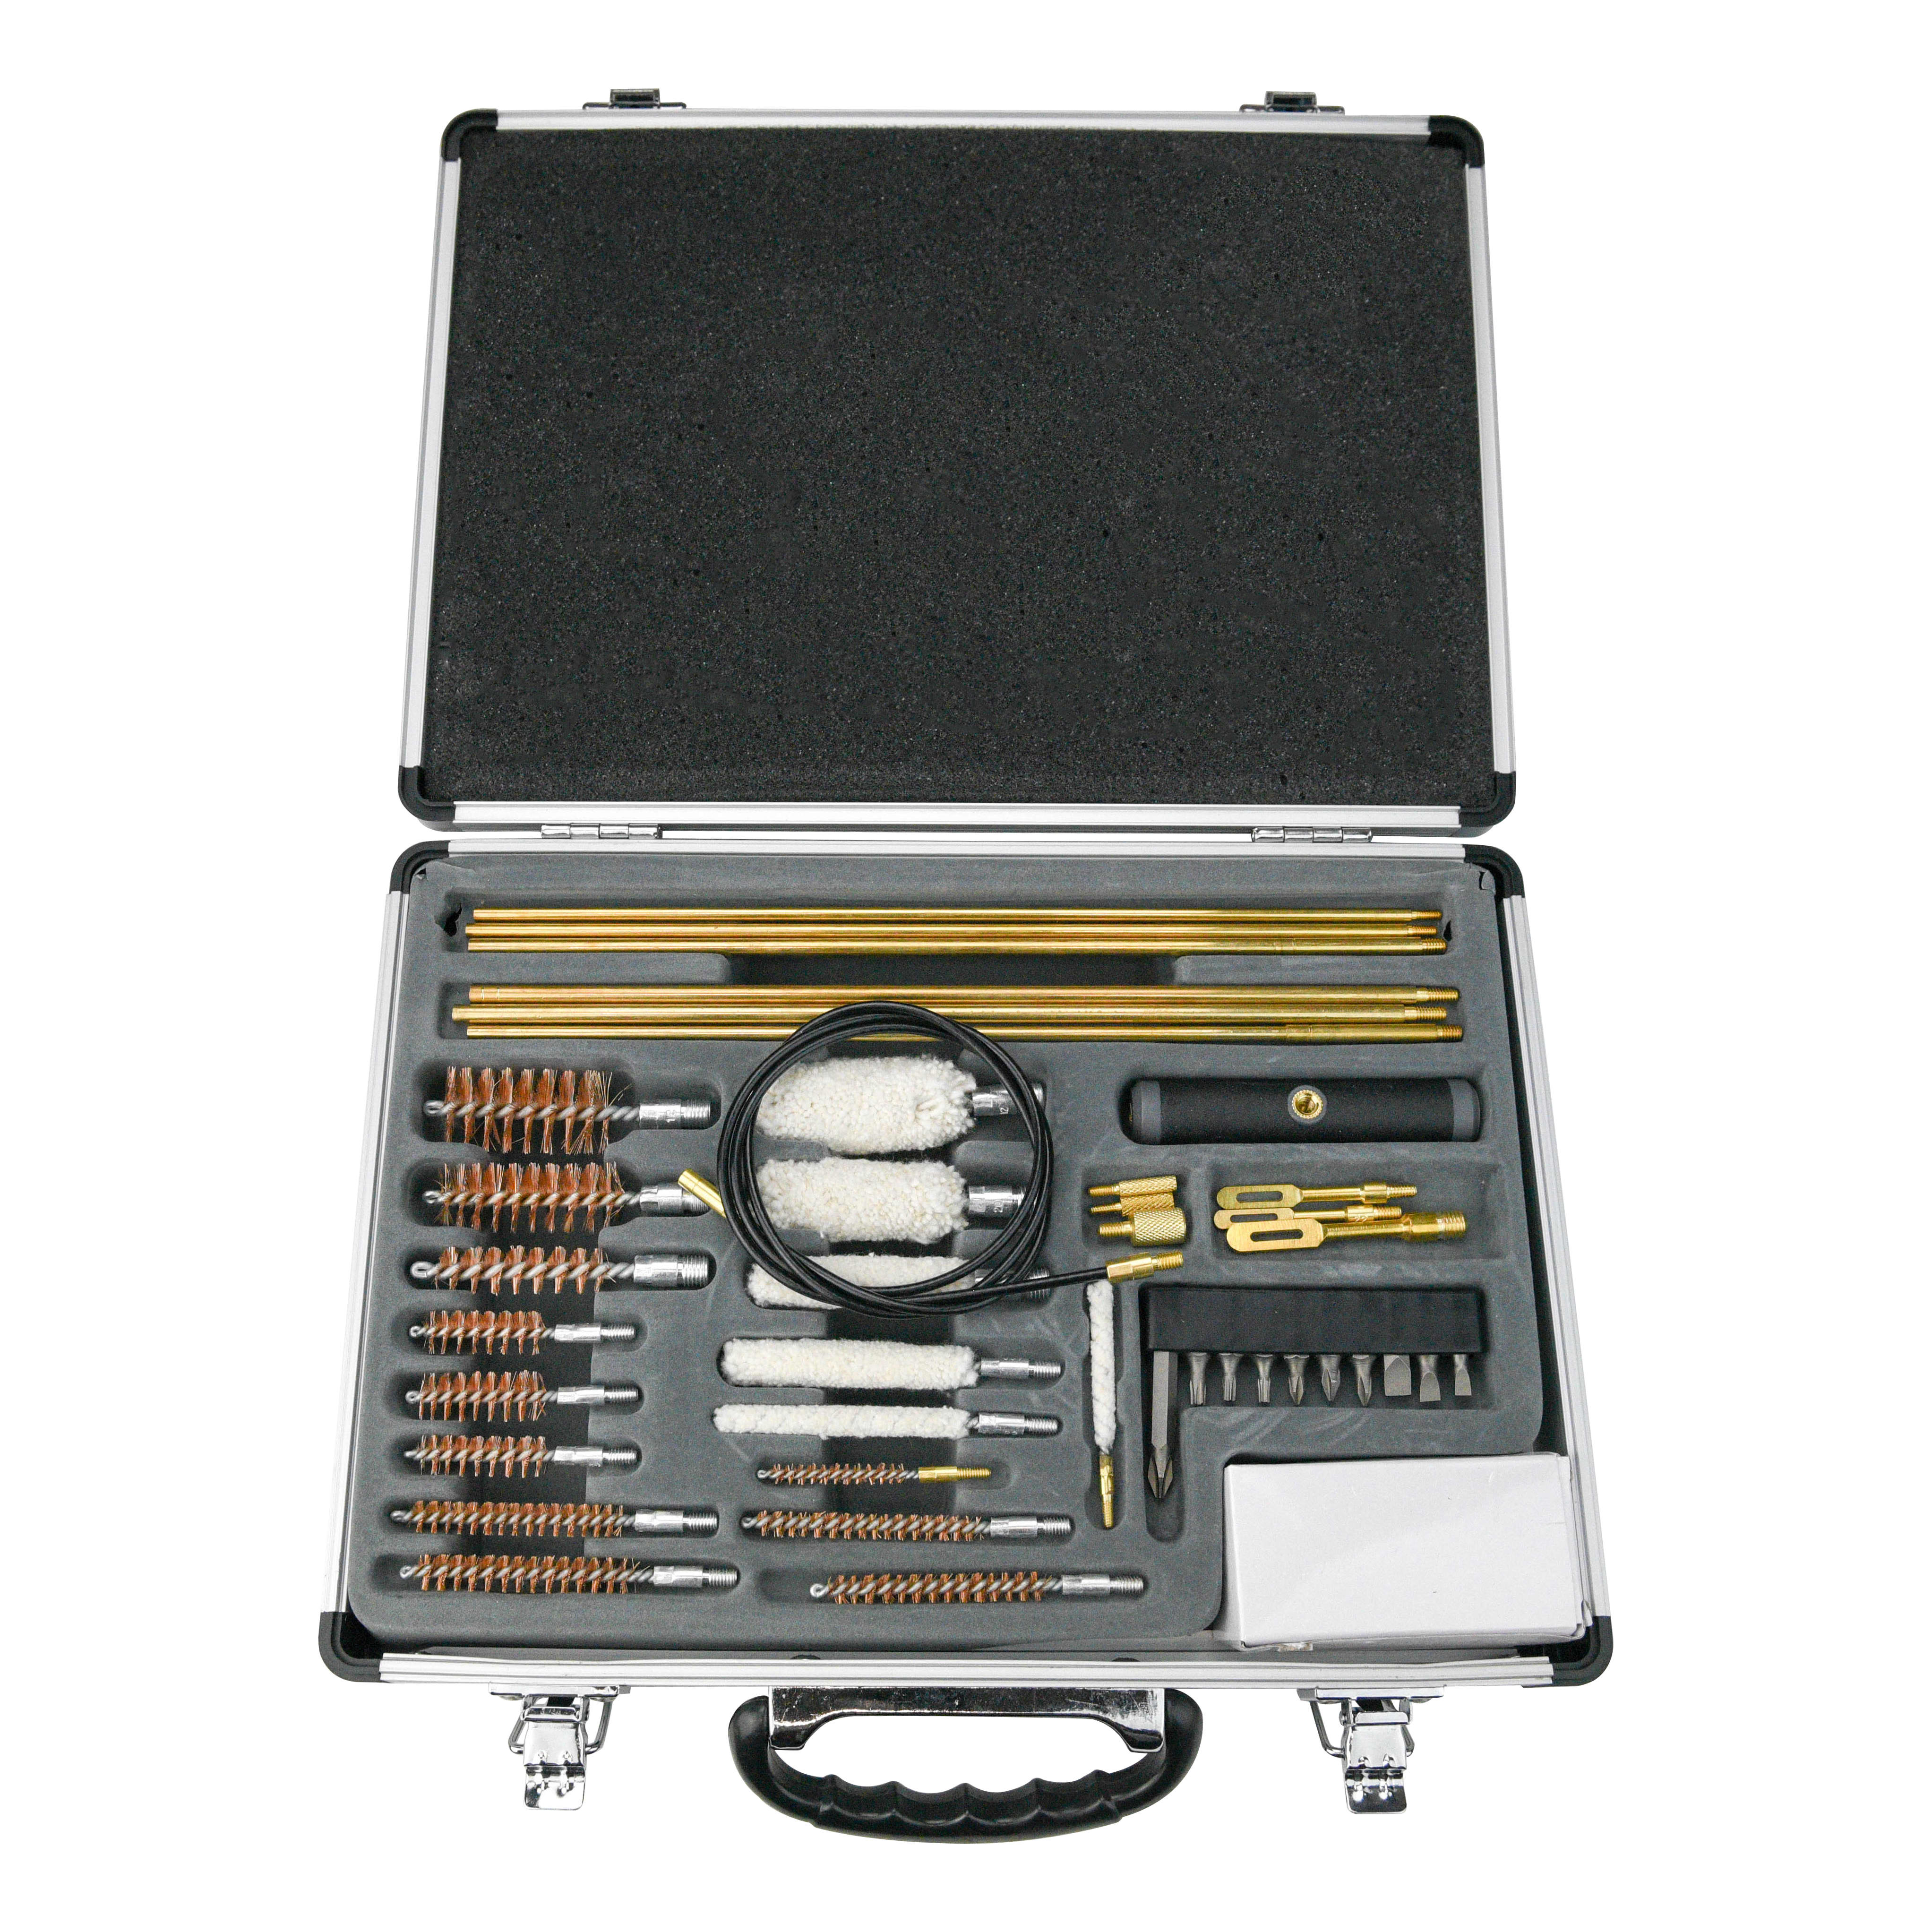 RangeMaxx® All-In-One Gun Cleaning Kit